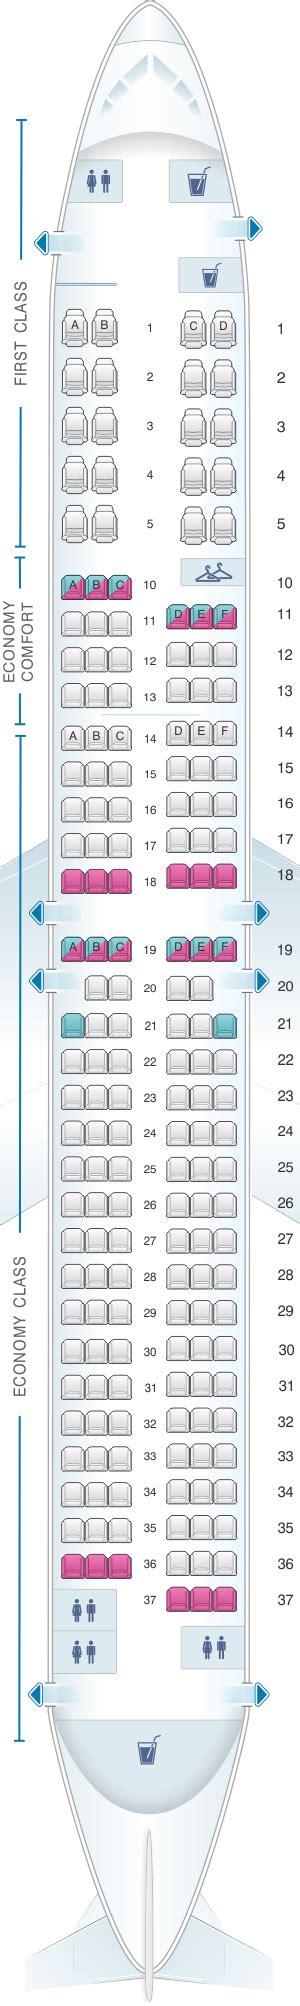 Airplane Seating Charts